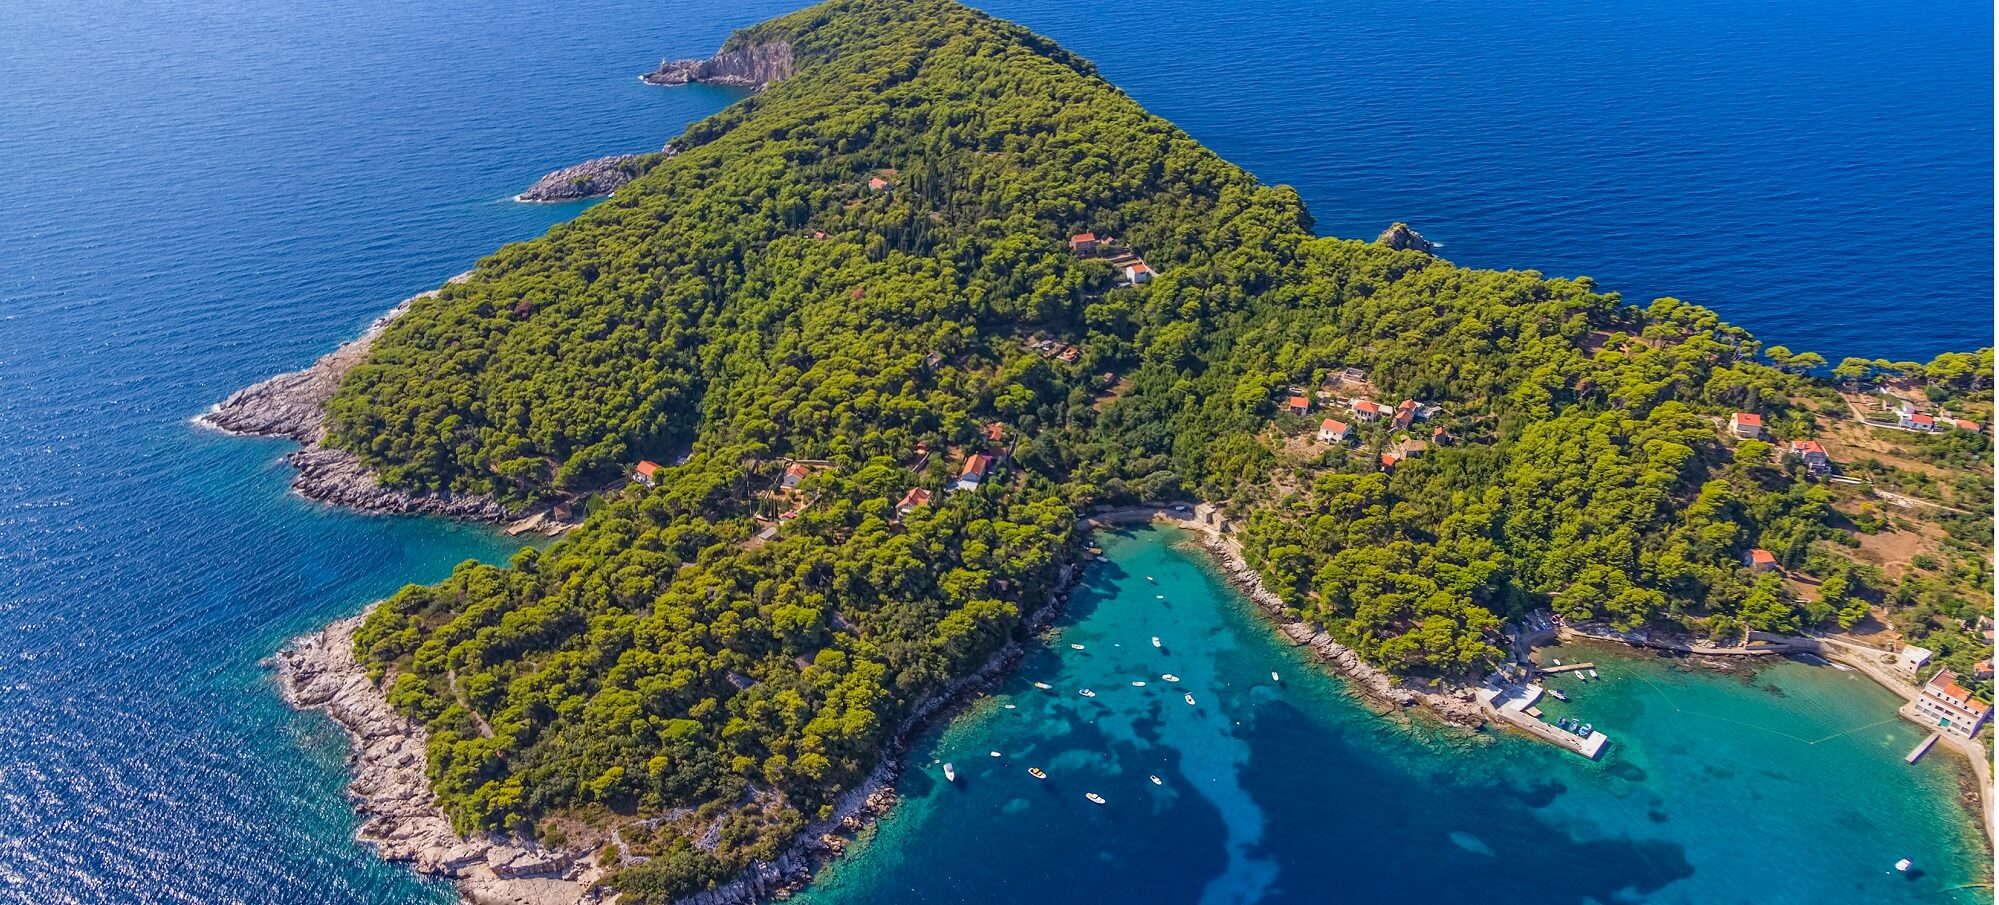 Elafiti Islands: A Dreamy Archipelago Just North of Dubrovnik